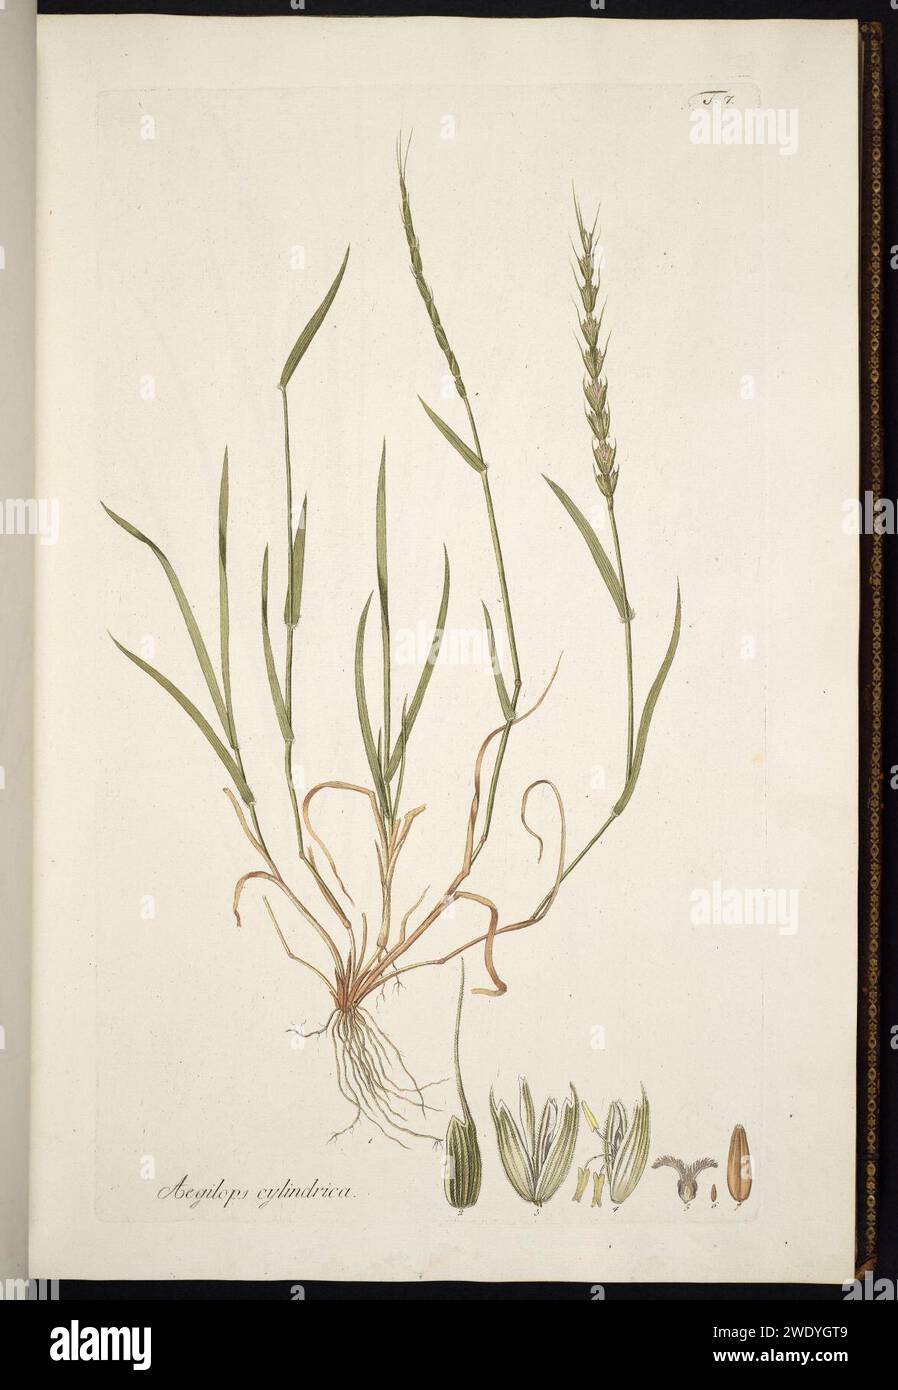 Aegilops cylindrica illustration (01). Stock Photo